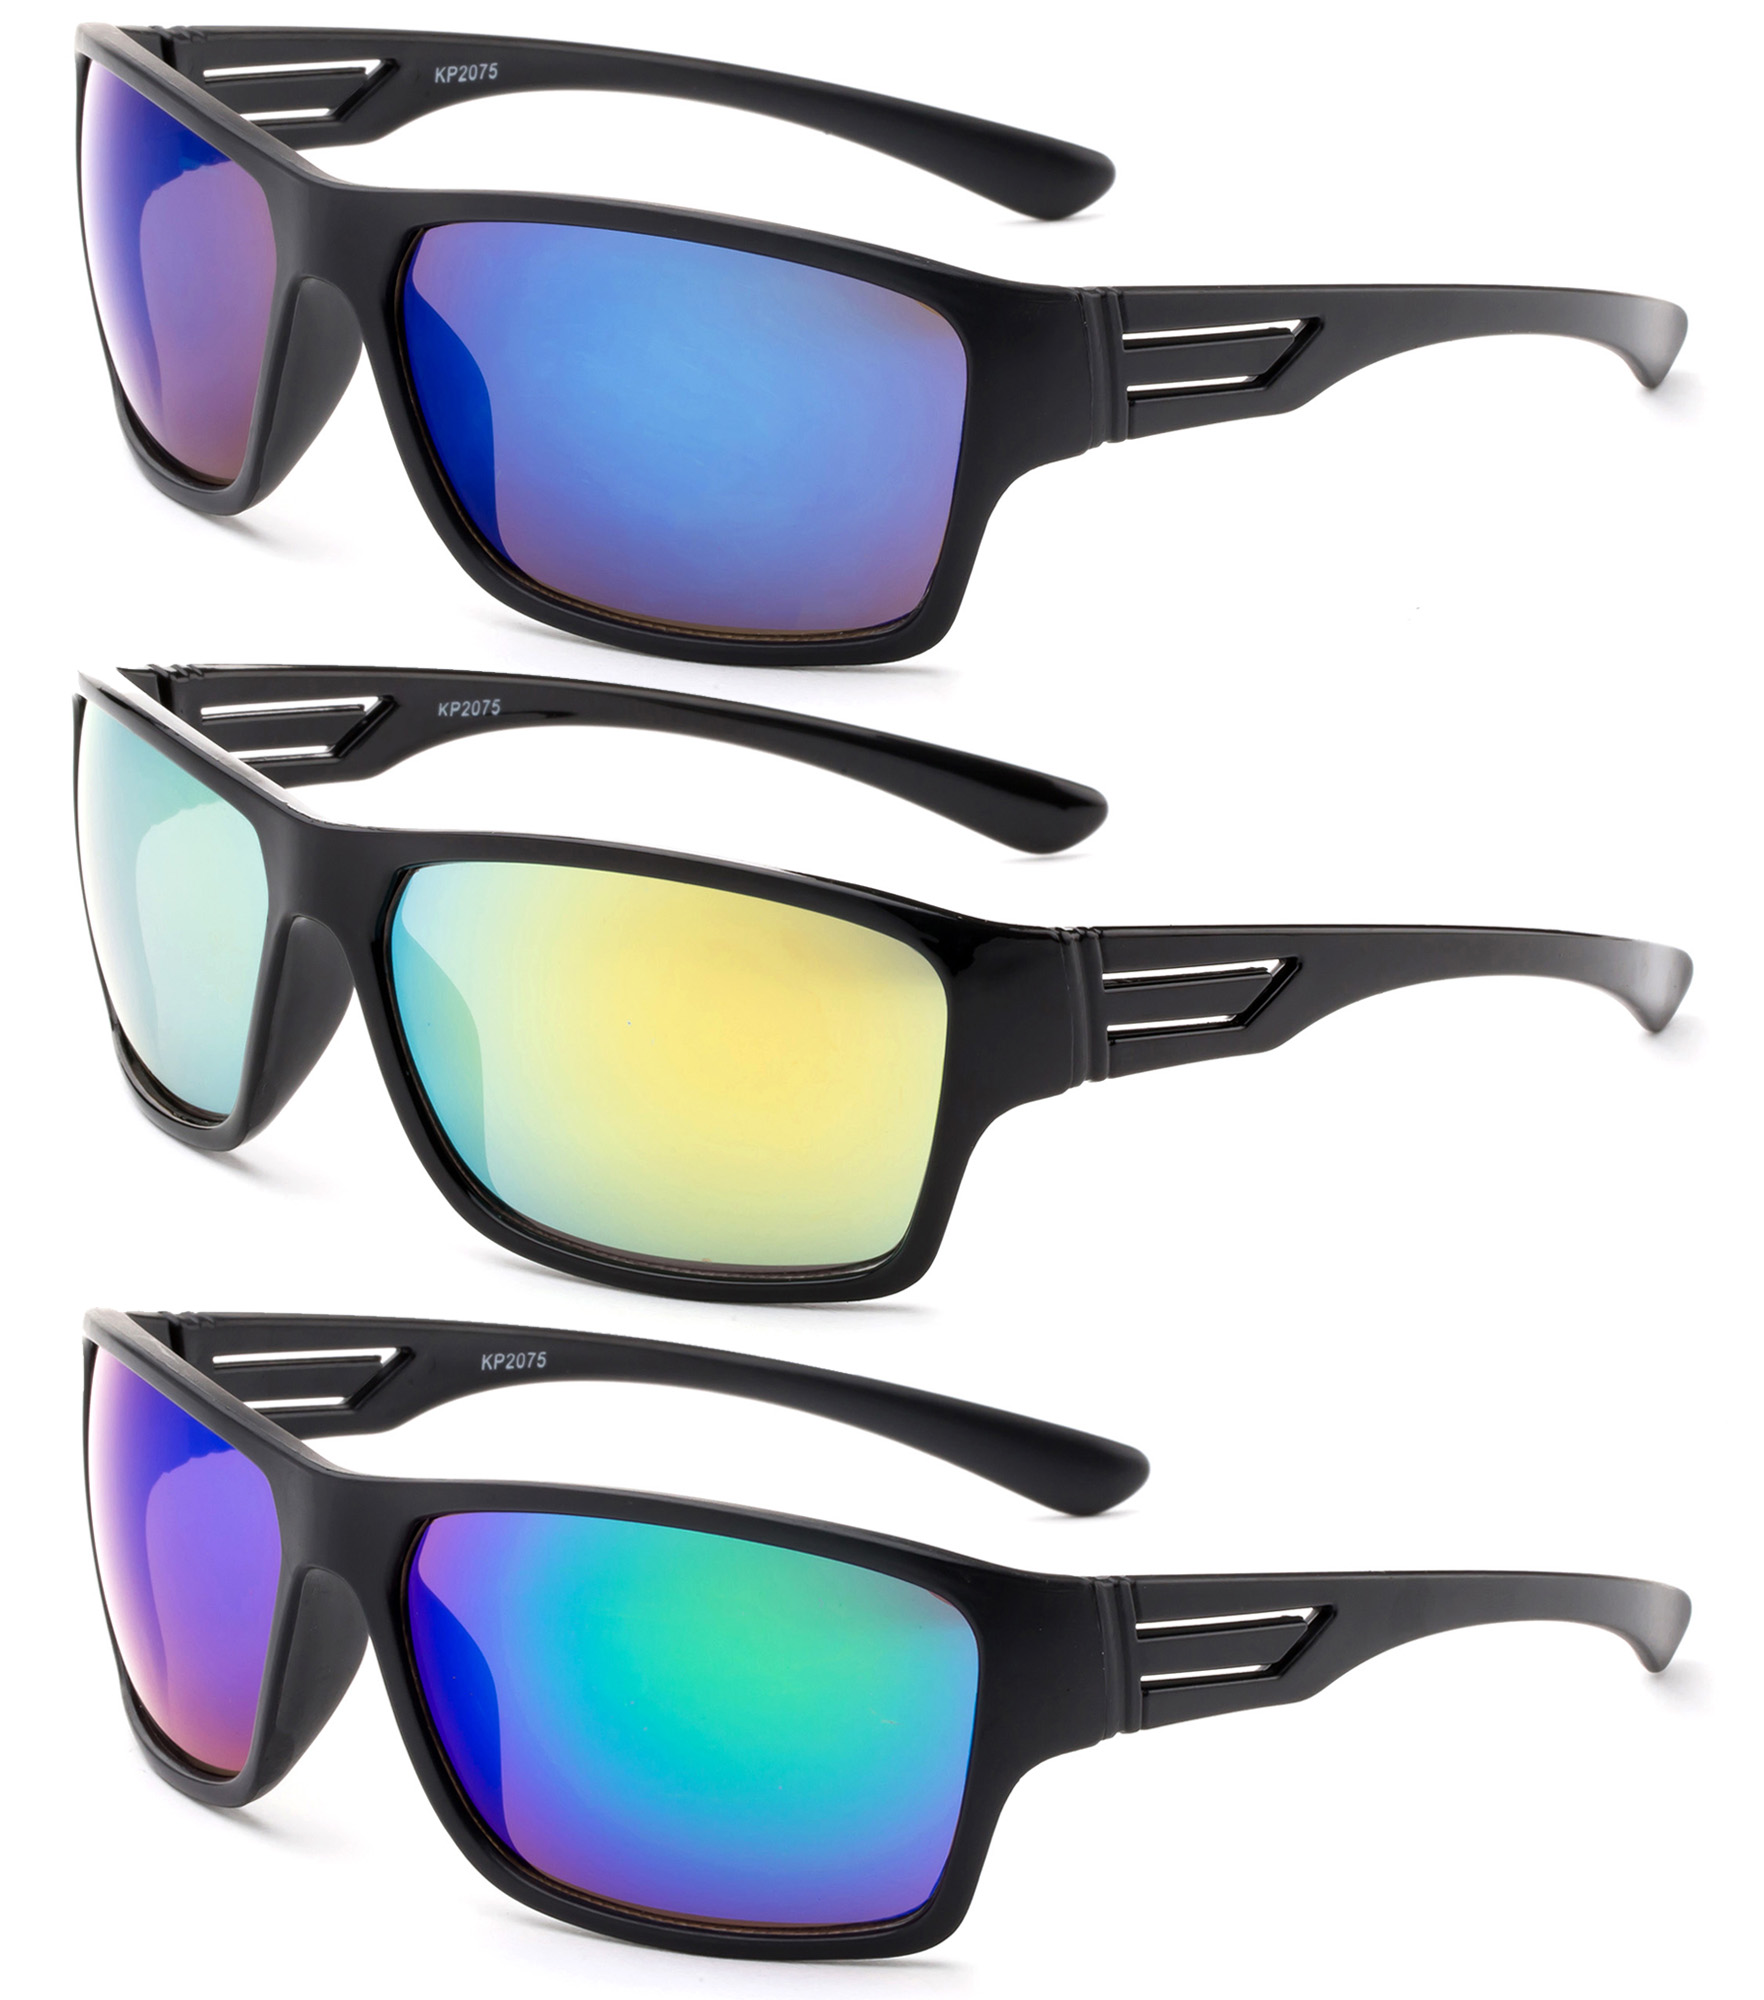 3 Pairs Newbee Fashion - "School" Kyra Kids Sport Design Wrap Around Flash/Mirror Sunglasses - image 1 of 1